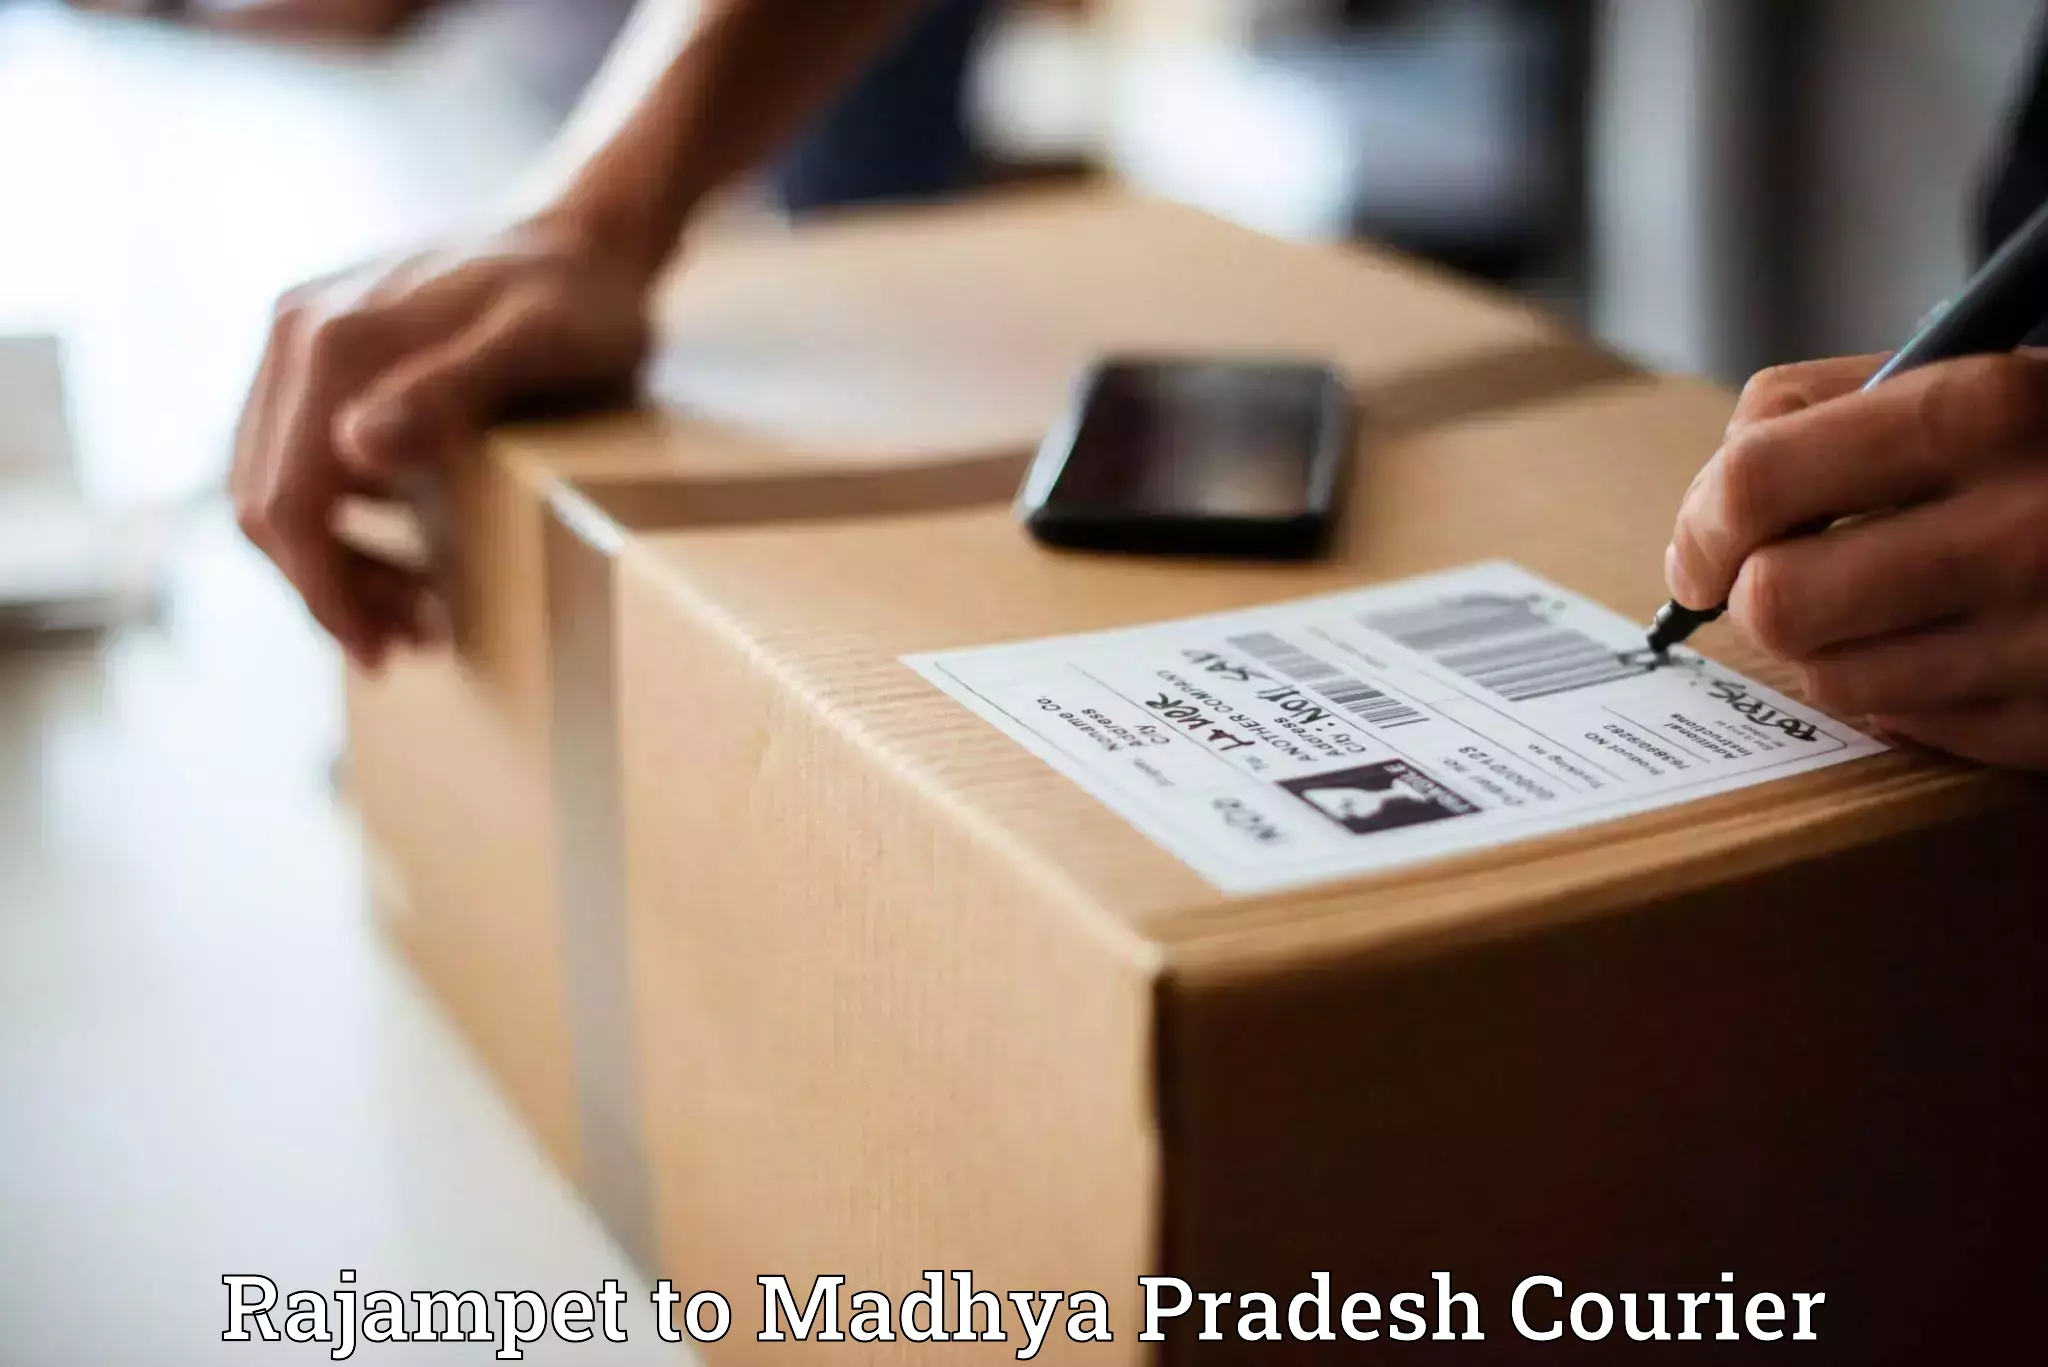 Courier service partnerships Rajampet to Gosalpur